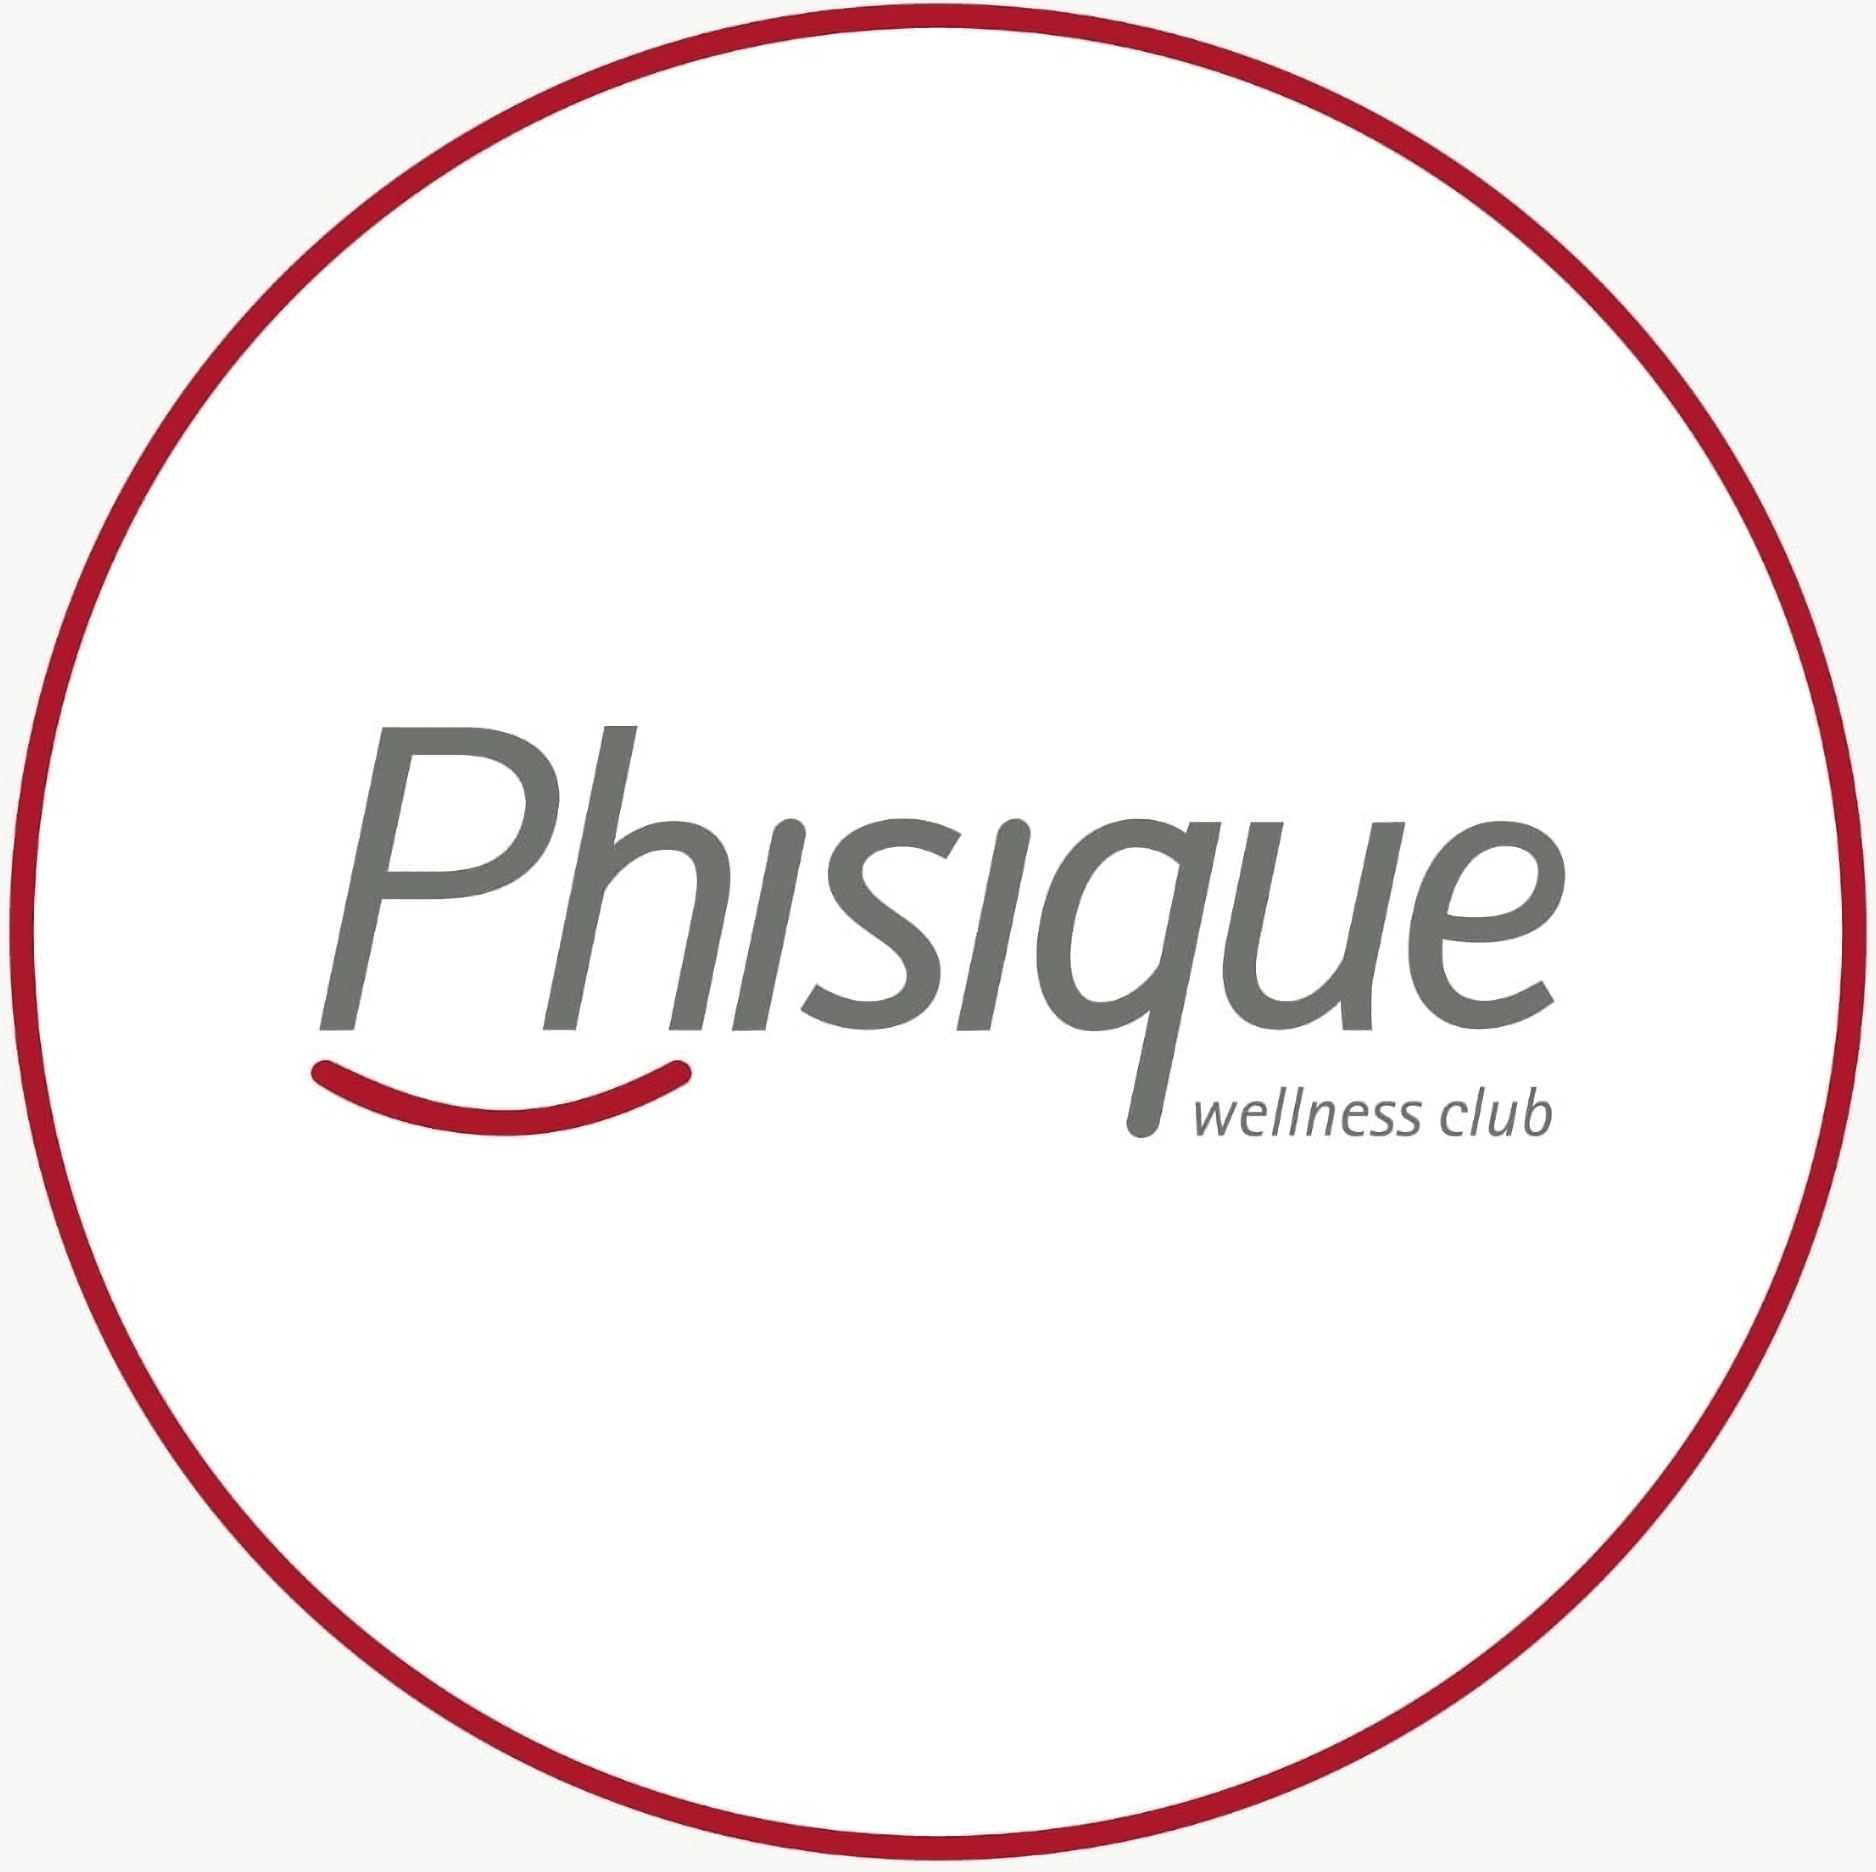 Phisique Wellness Club – Swisotel-897